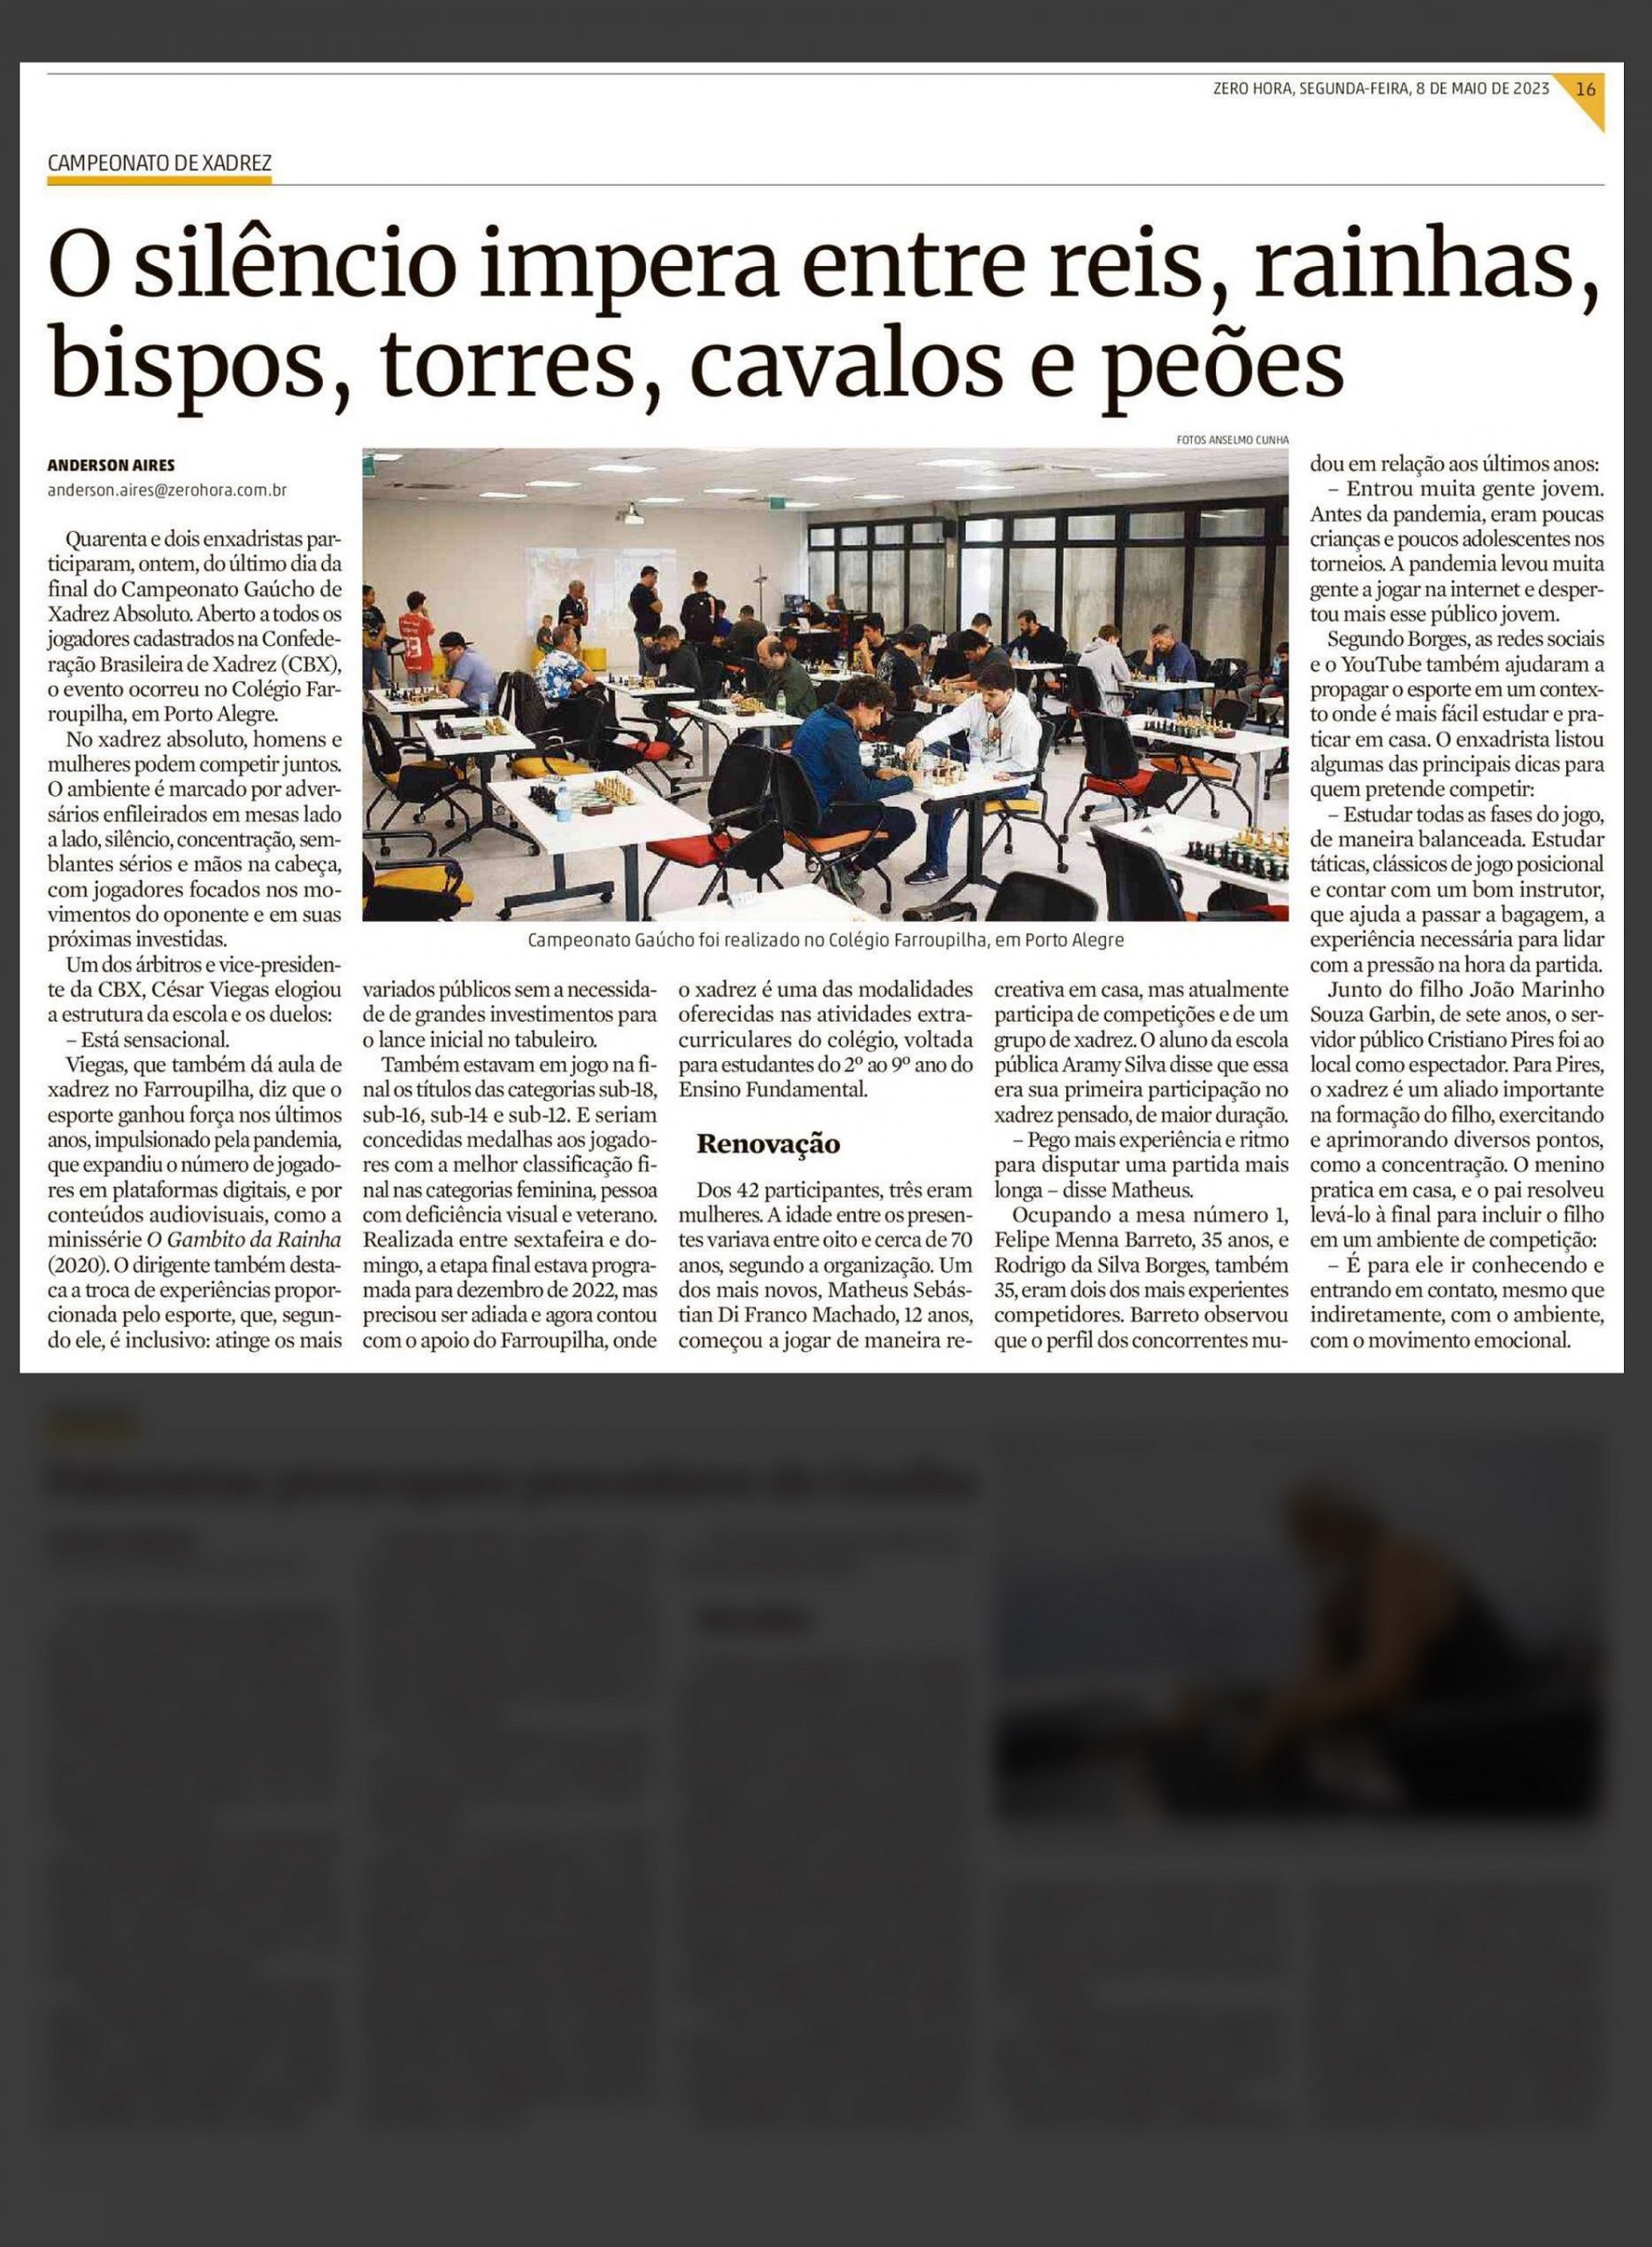 Colégio Farroupilha sediou Campeonato Gaúcho de Xadrez Absoluto